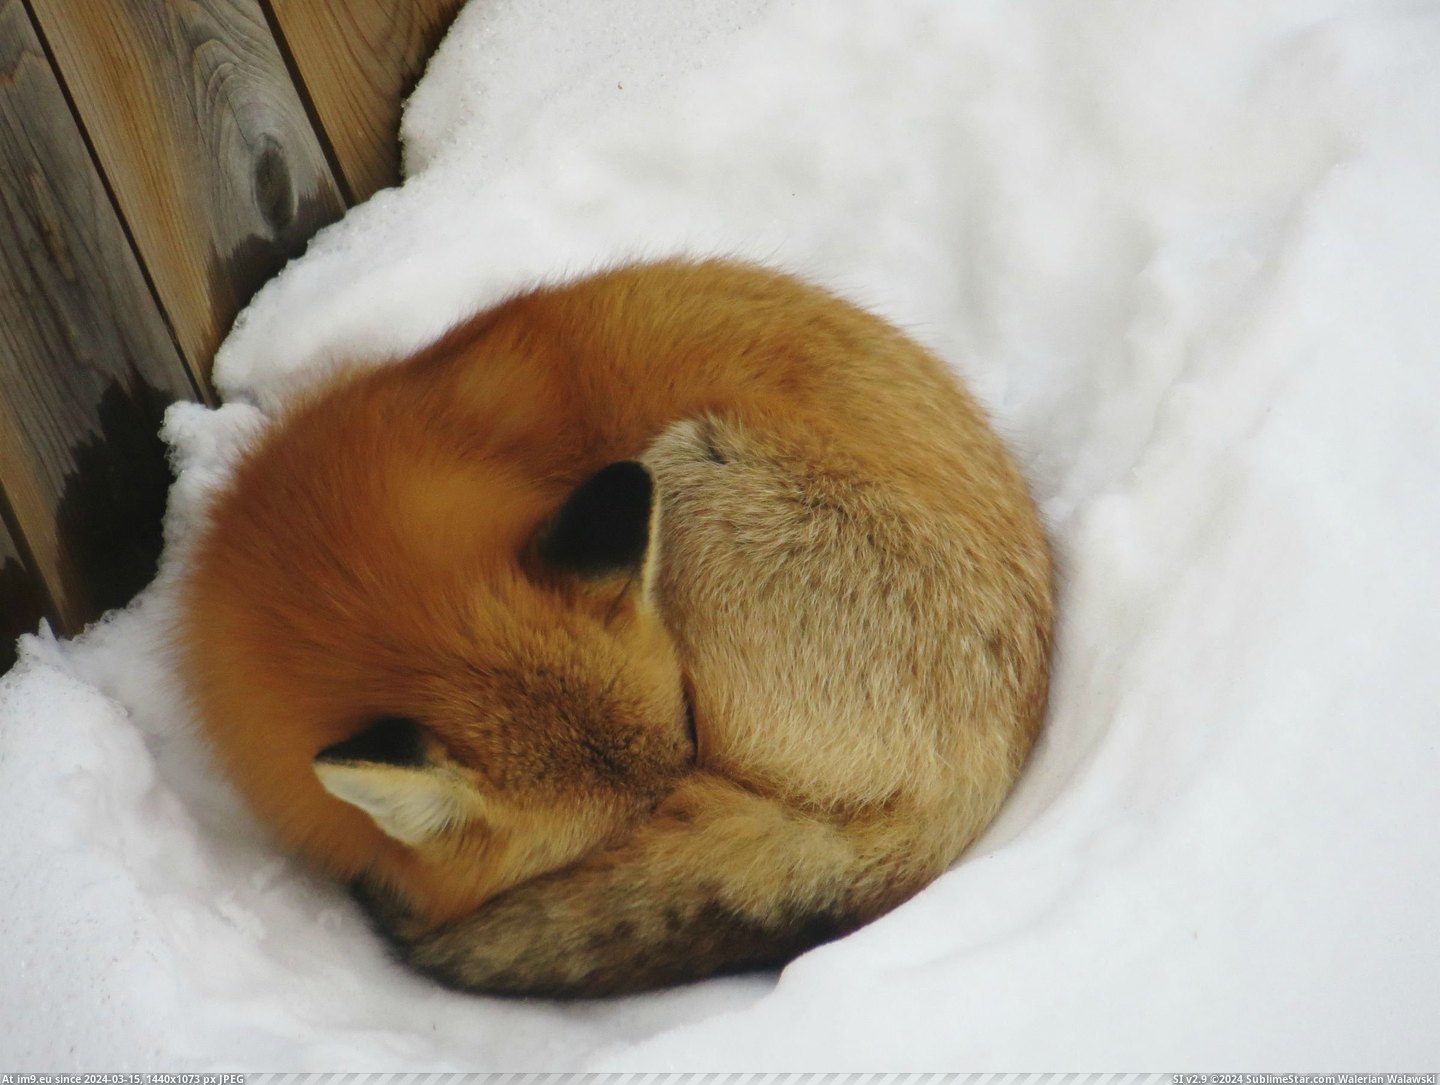 #Red #Canada #Alberta #Backyard #Fox #Sleeping [Pics] Red fox sleeping in my backyard! Alberta, Canada. 2 Pic. (Obraz z album My r/PICS favs))